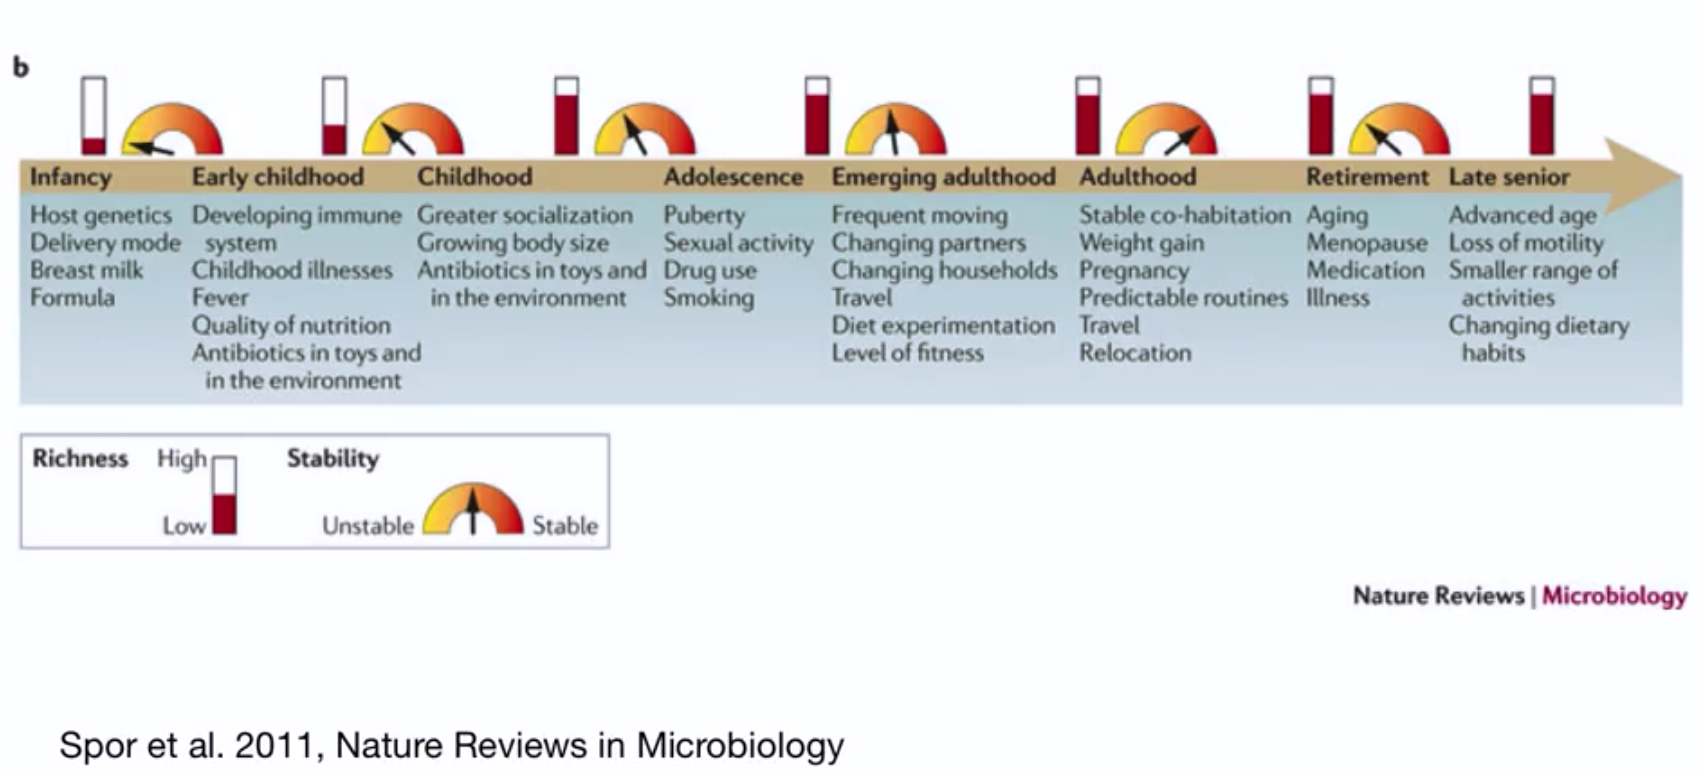 Microbiome evolution